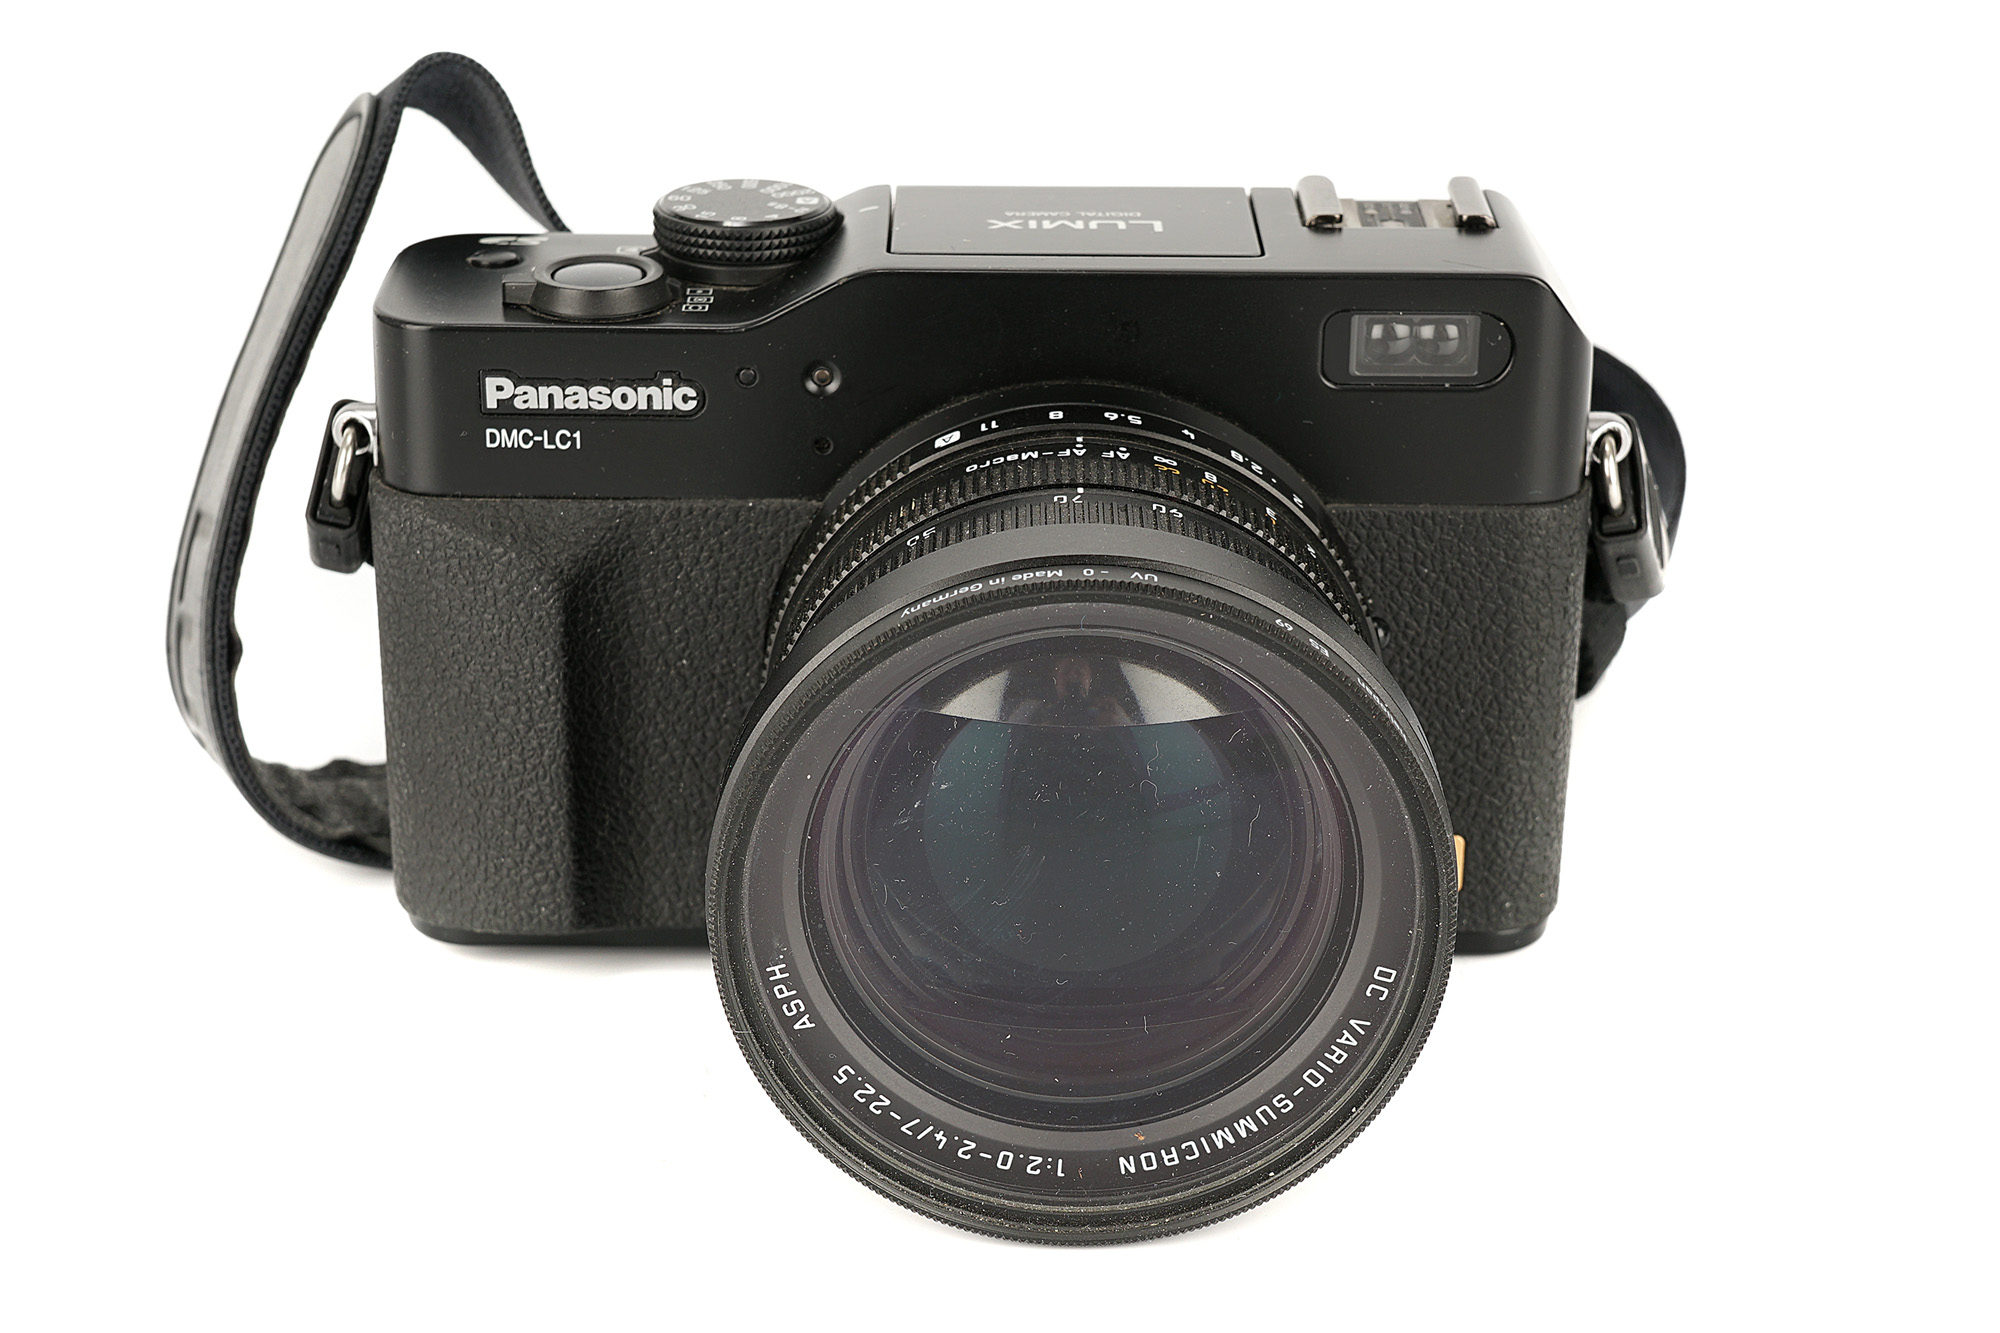 A Panasonic DMC-LC1 Digital Camera,